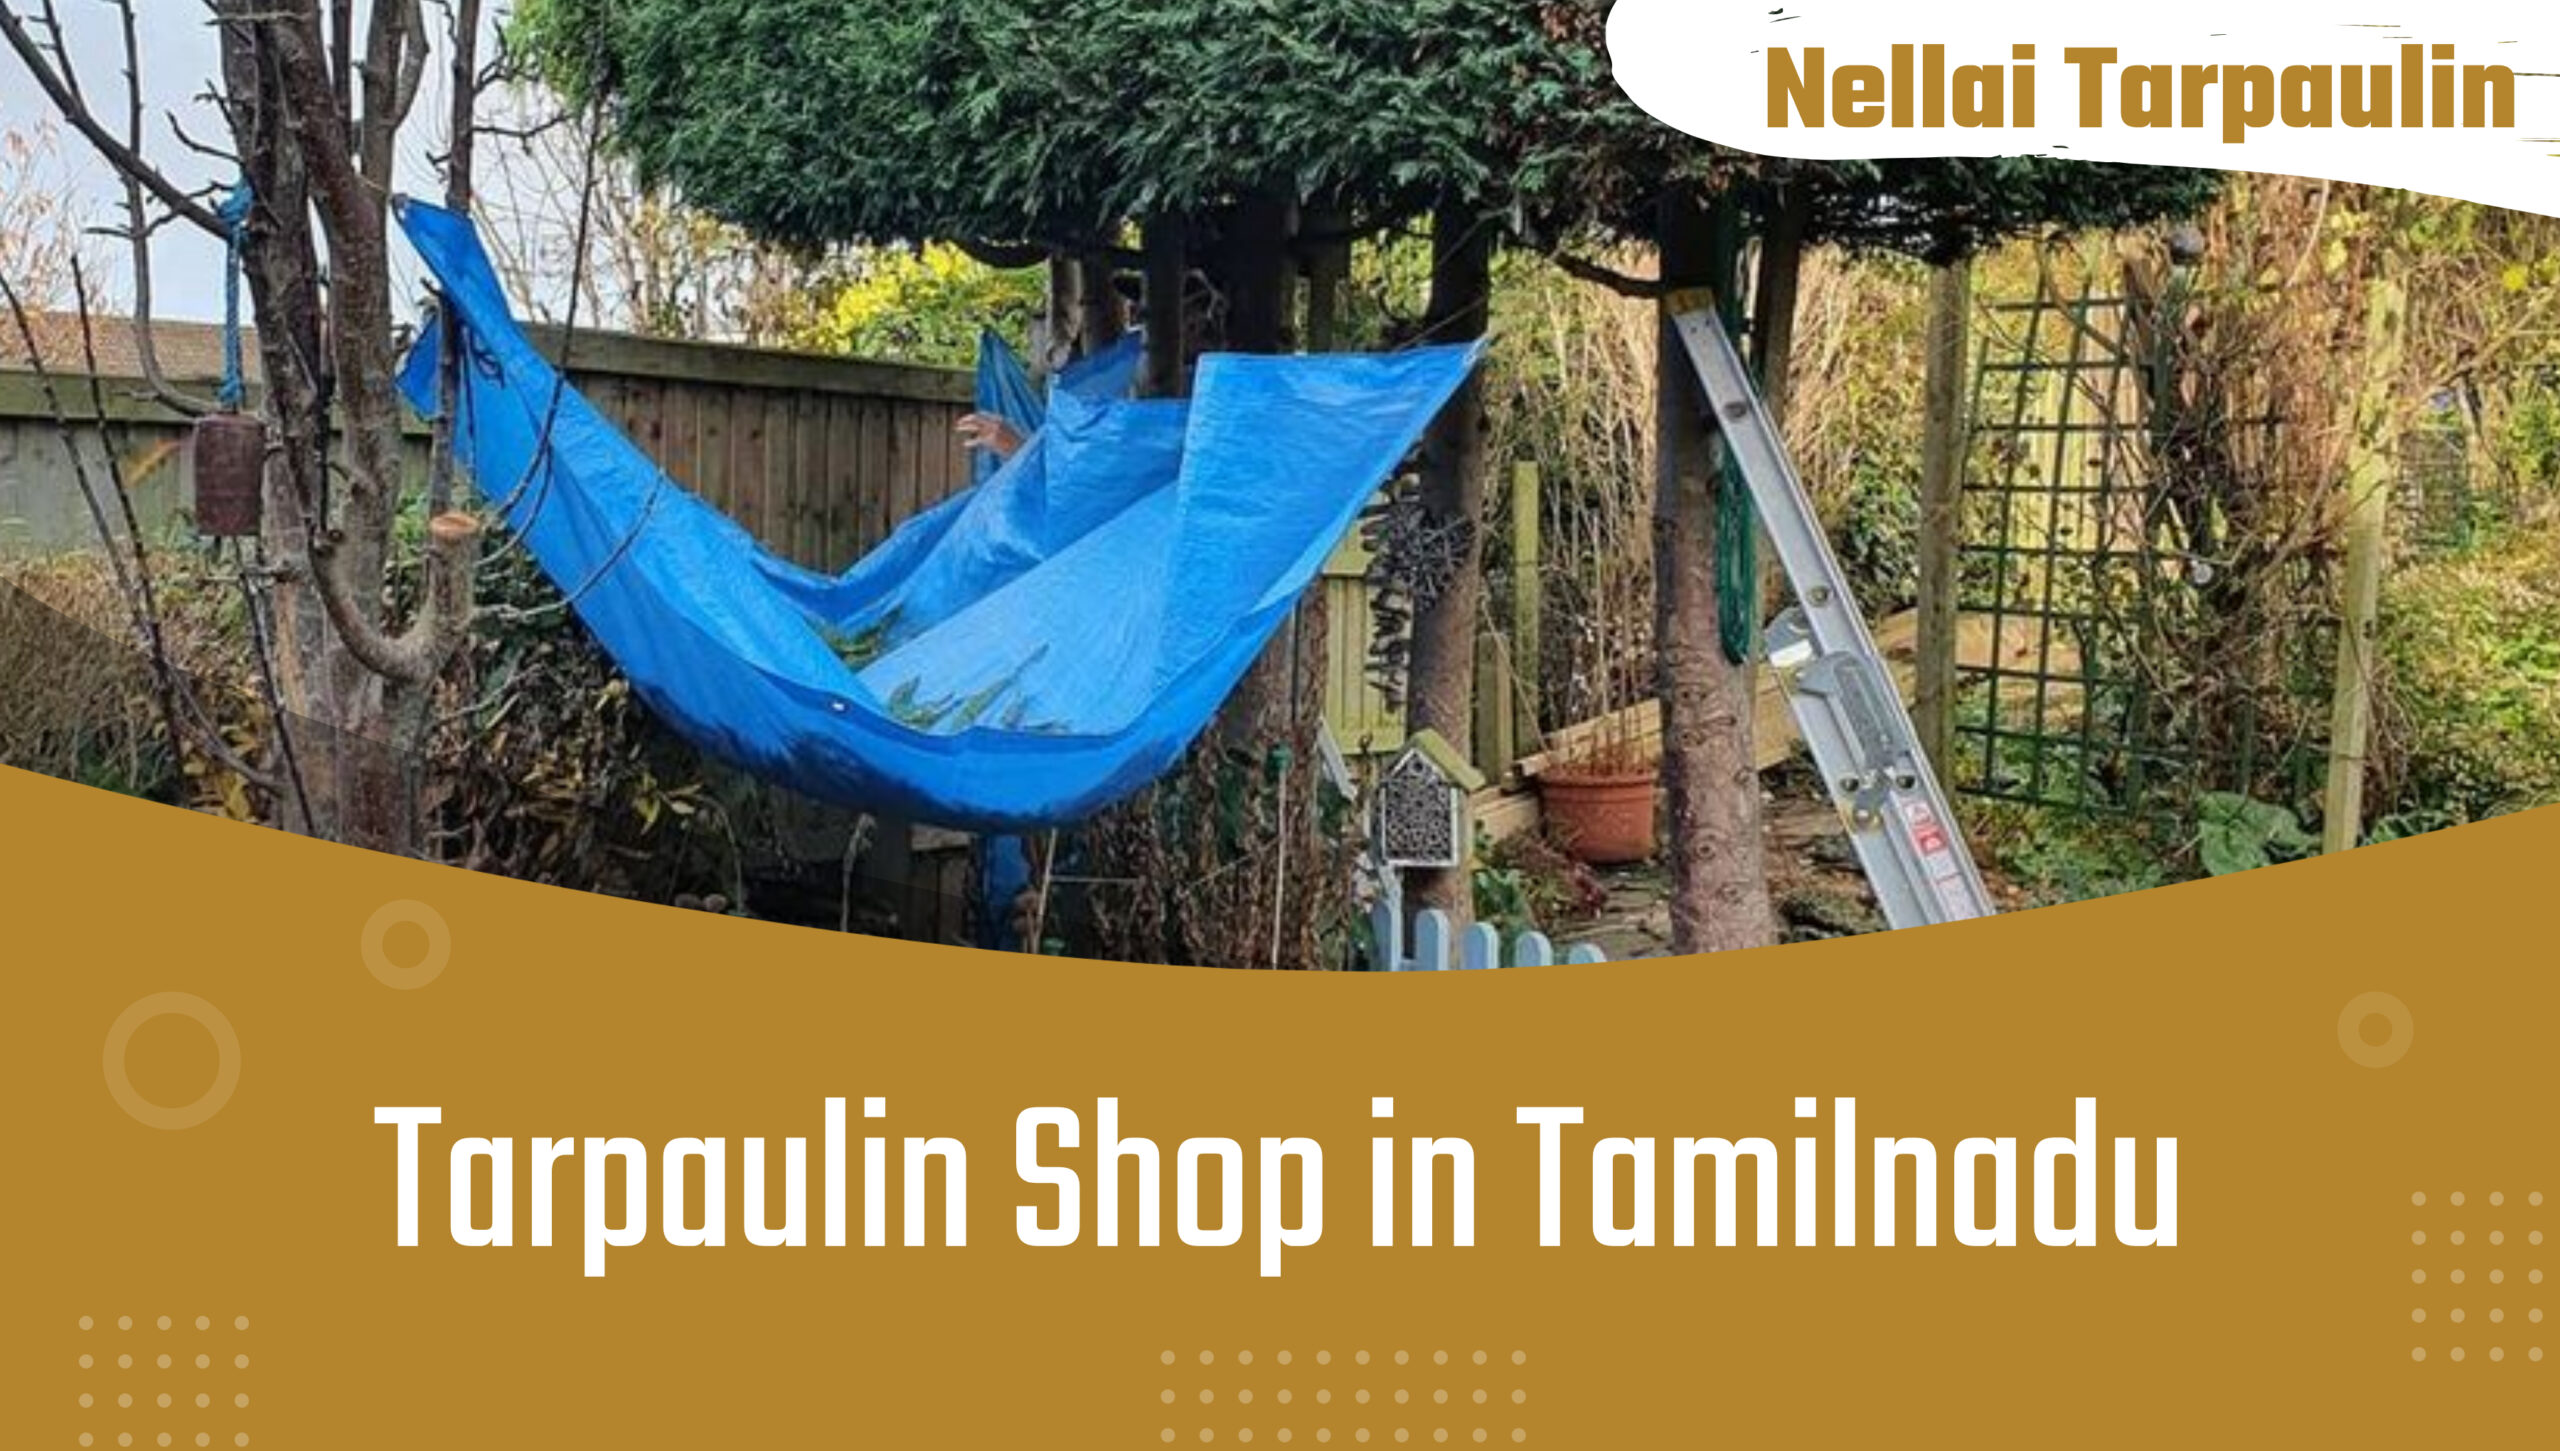 Tarpaulin shop in Tamil Nadu | Tarpaulin Shop